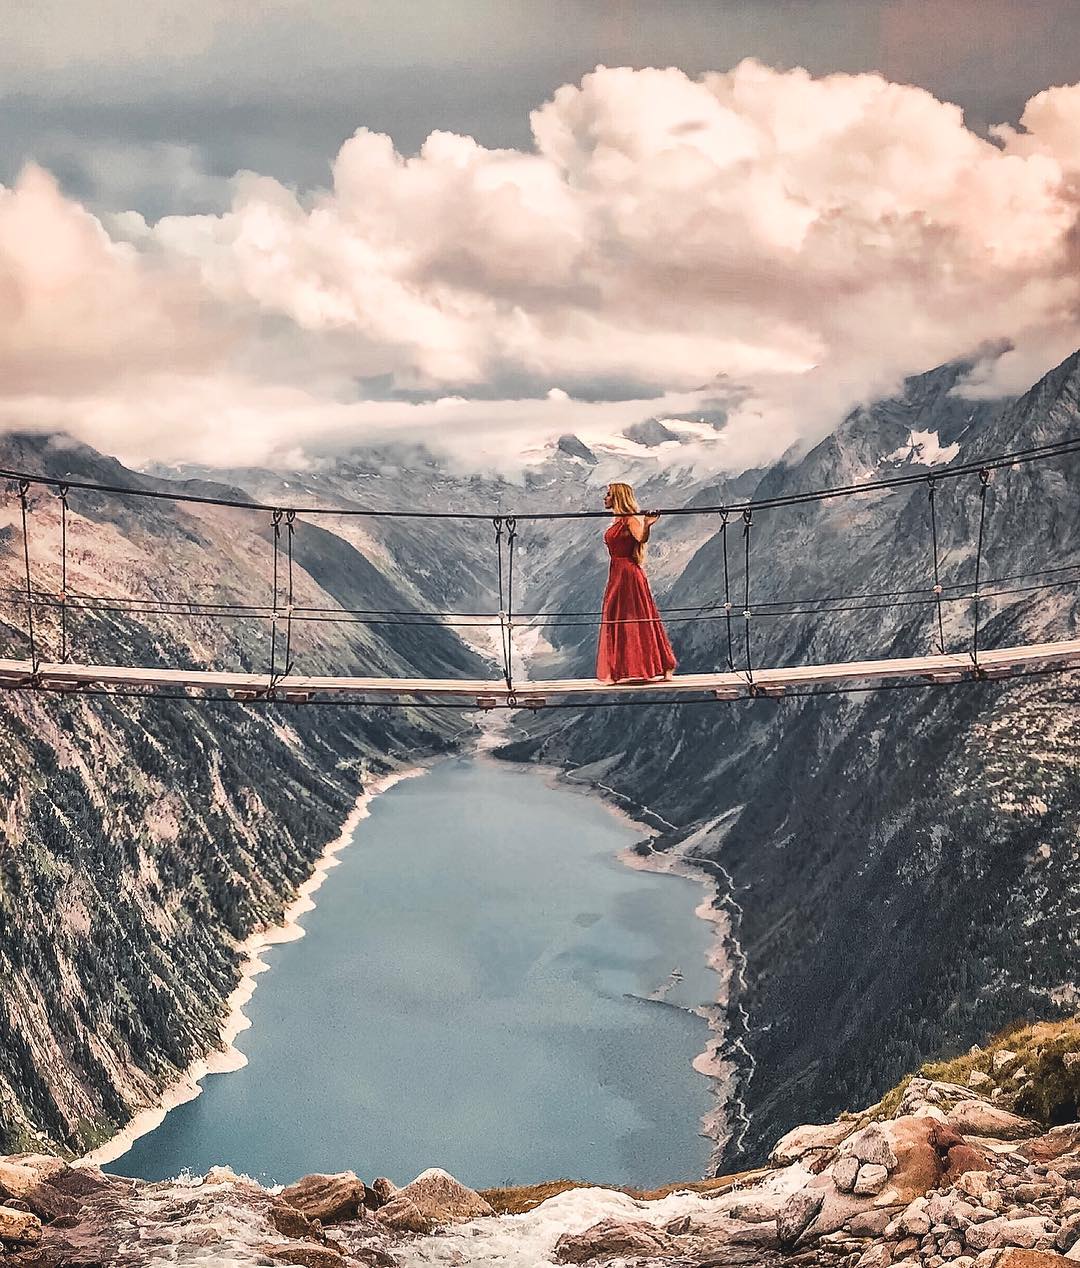 Ad/Werbung
☁️On the way to visit the Sky ☁️
This is one of my favorite magical places ✨
.
.
.
.
.
#alps #mountains #bridge #lake #waterfall #hangingbridge #suspensionbridge #abyss #reddress #fashion #walk #skywalk #zillertal #tirol #tyrol #austria #alpen #alpine #alpinebabes #dandestinations #travel #travelblogger #travelgirl #nomad #globetrotter #adventure #outdoor #hike #mountaingirls